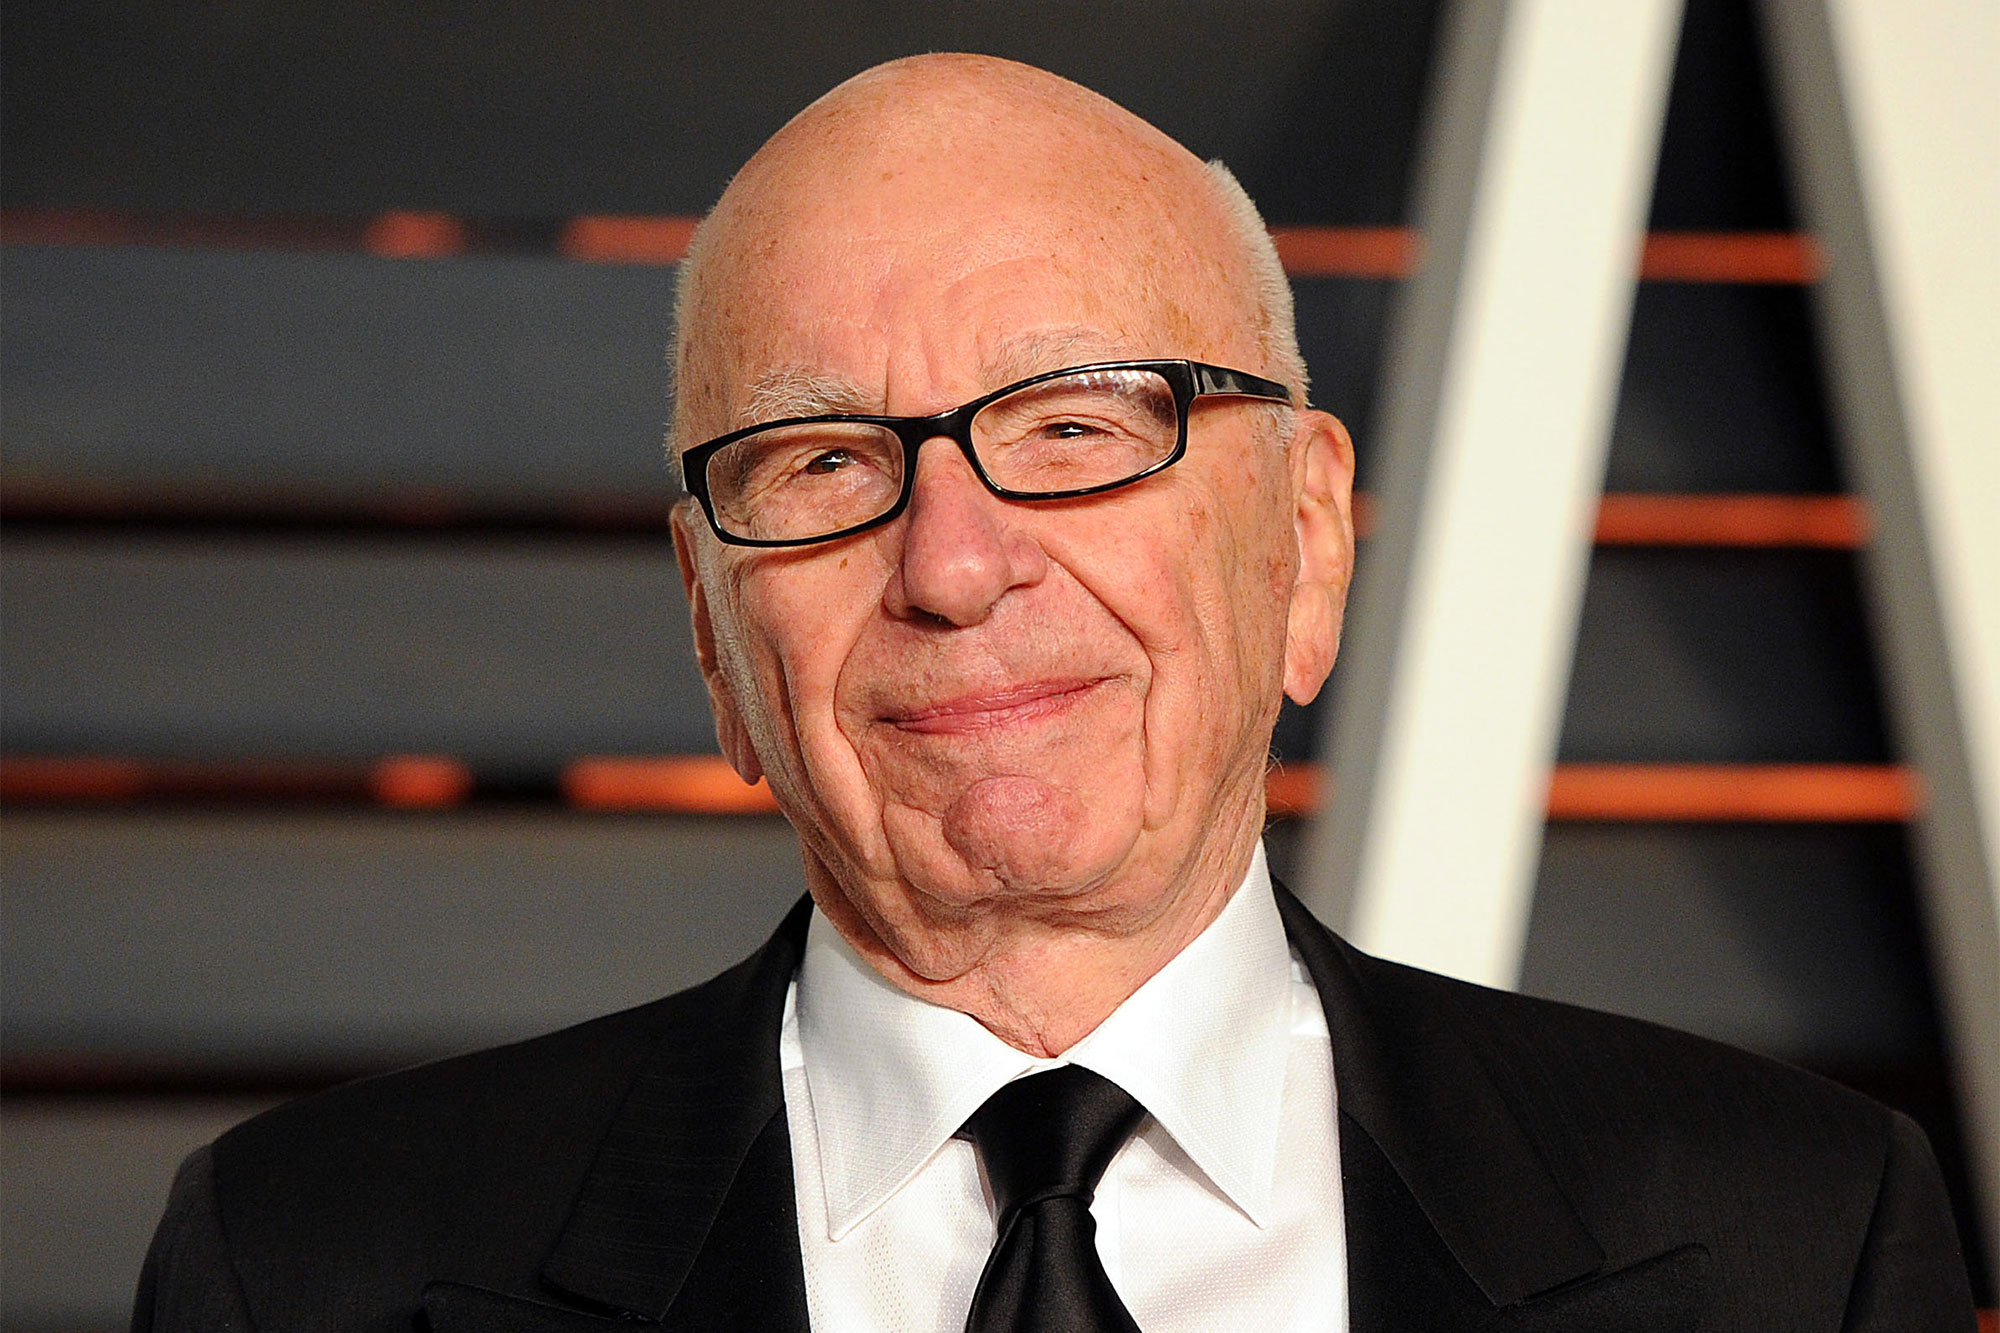 Rupert Murdoch slams Giant Tech’s censorship of conservatives